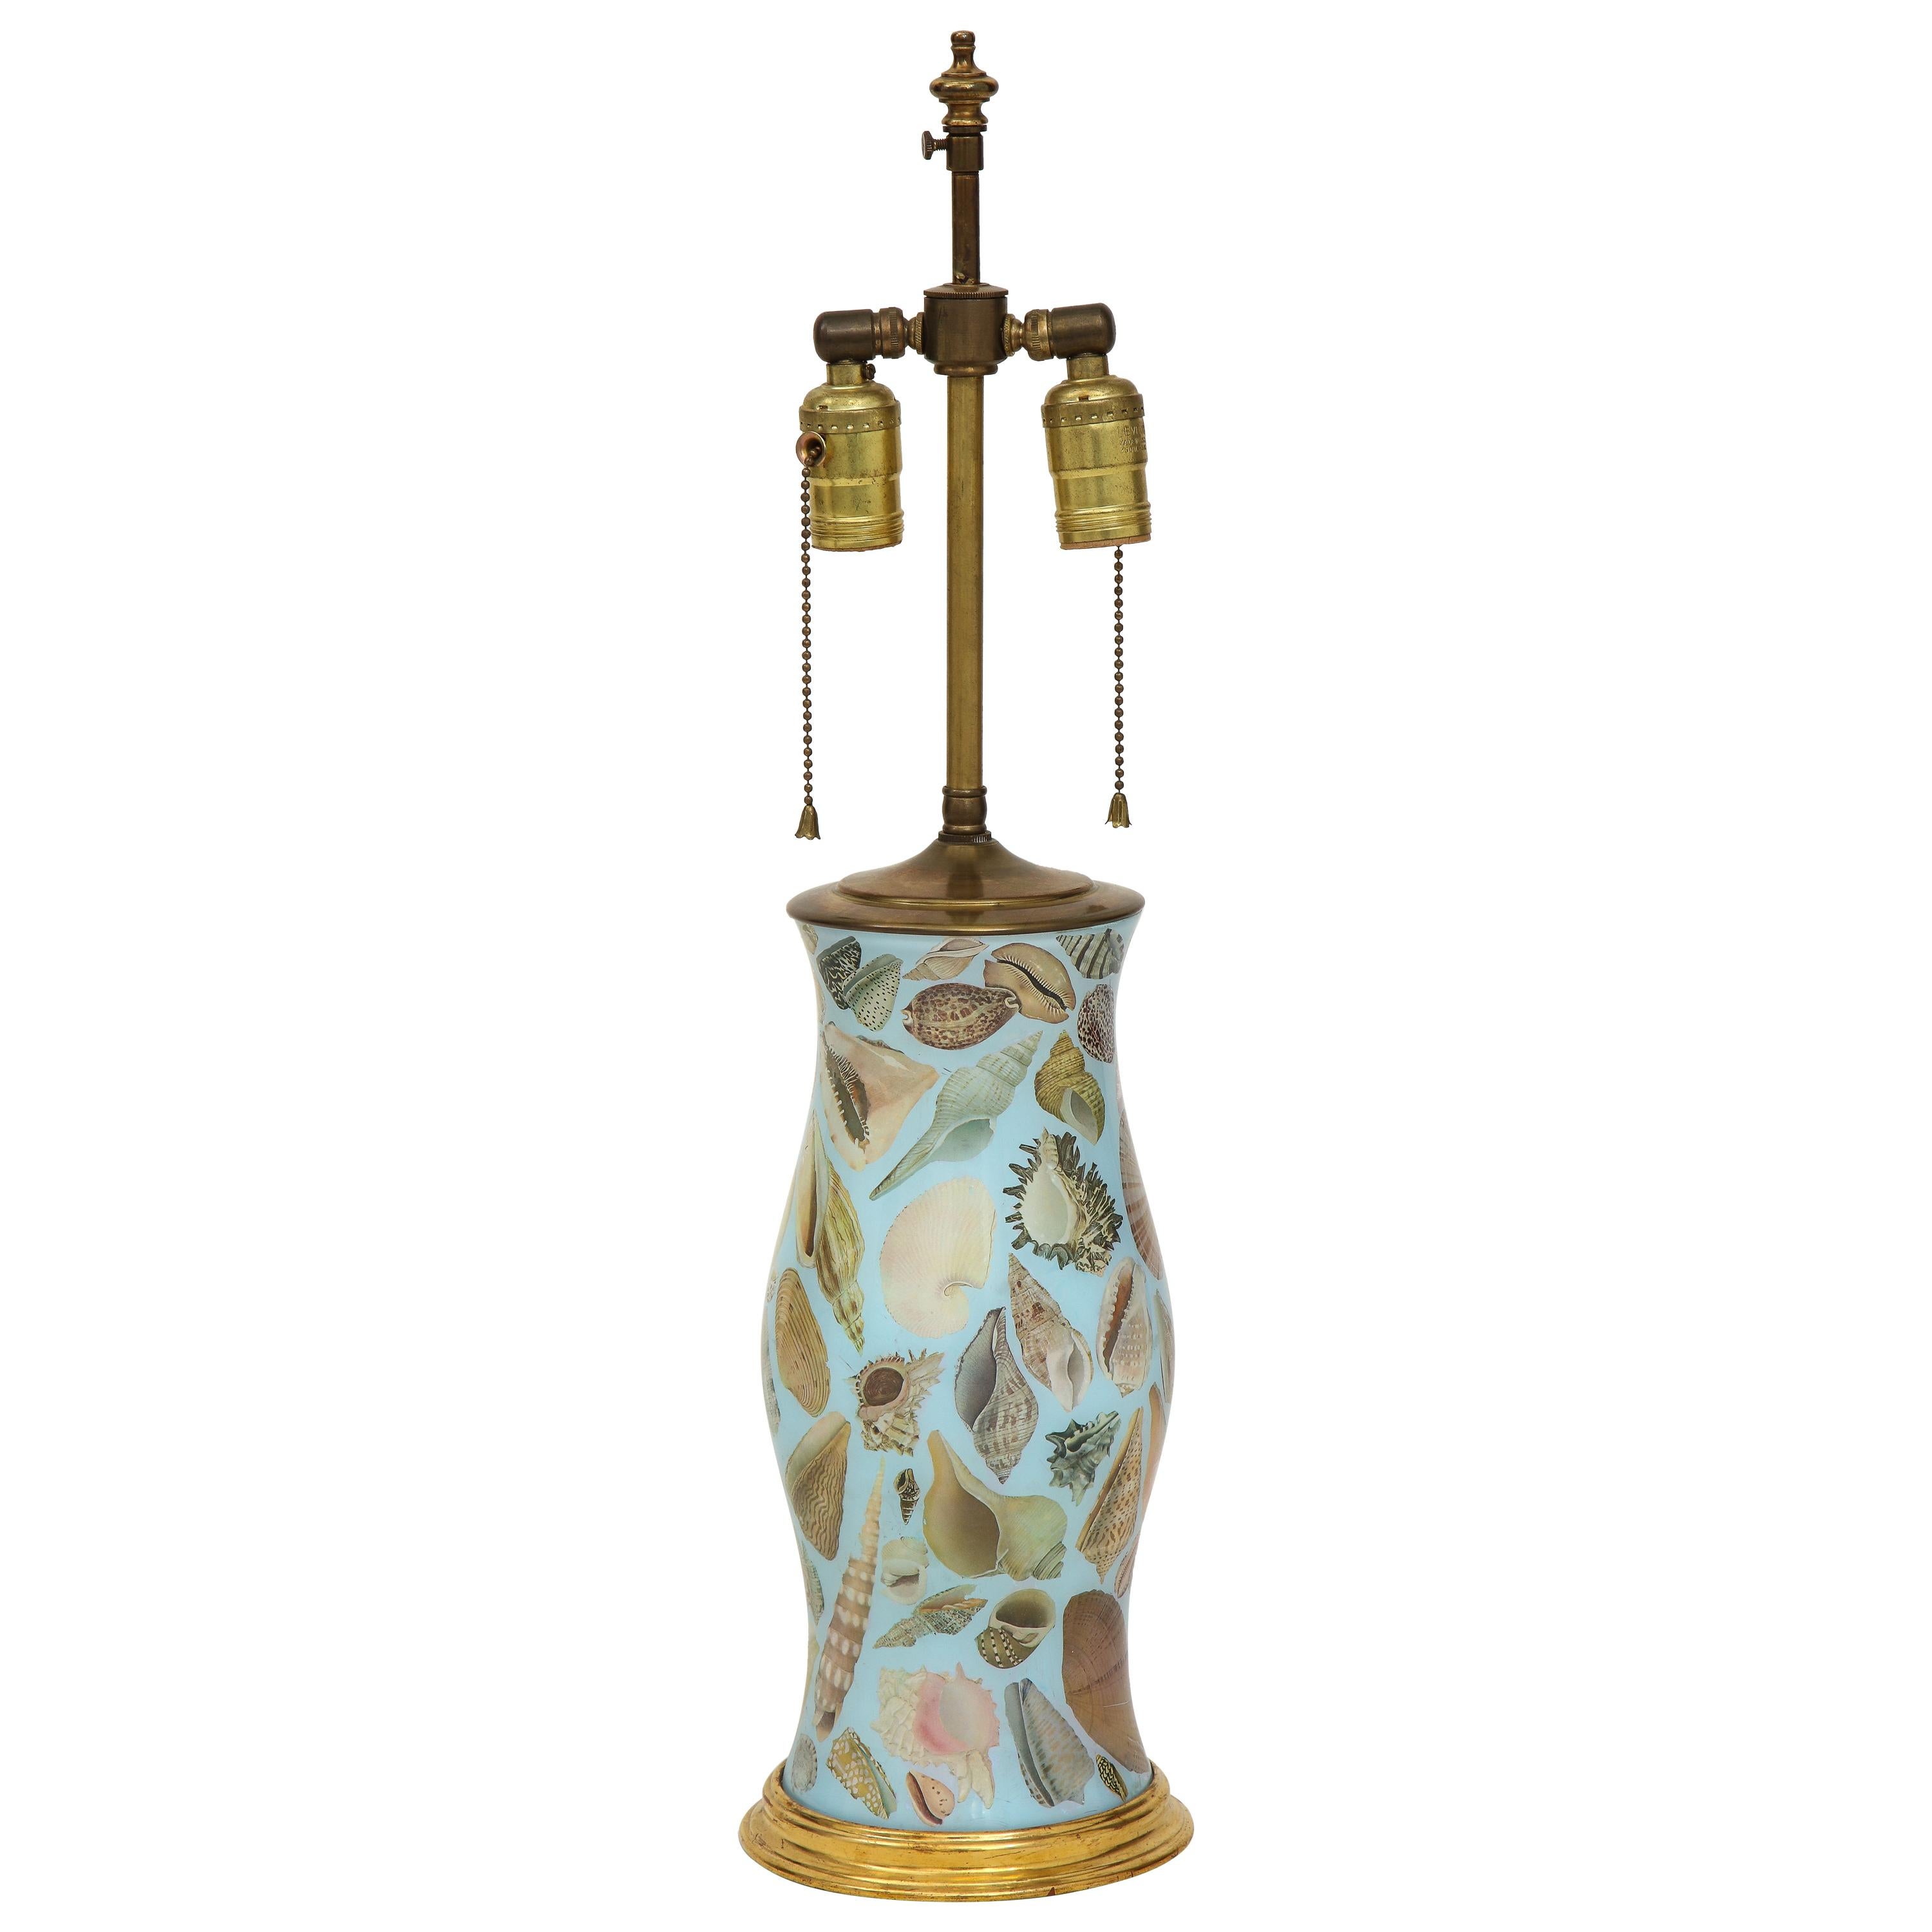 Decalcomania Seashell Vase Lamp